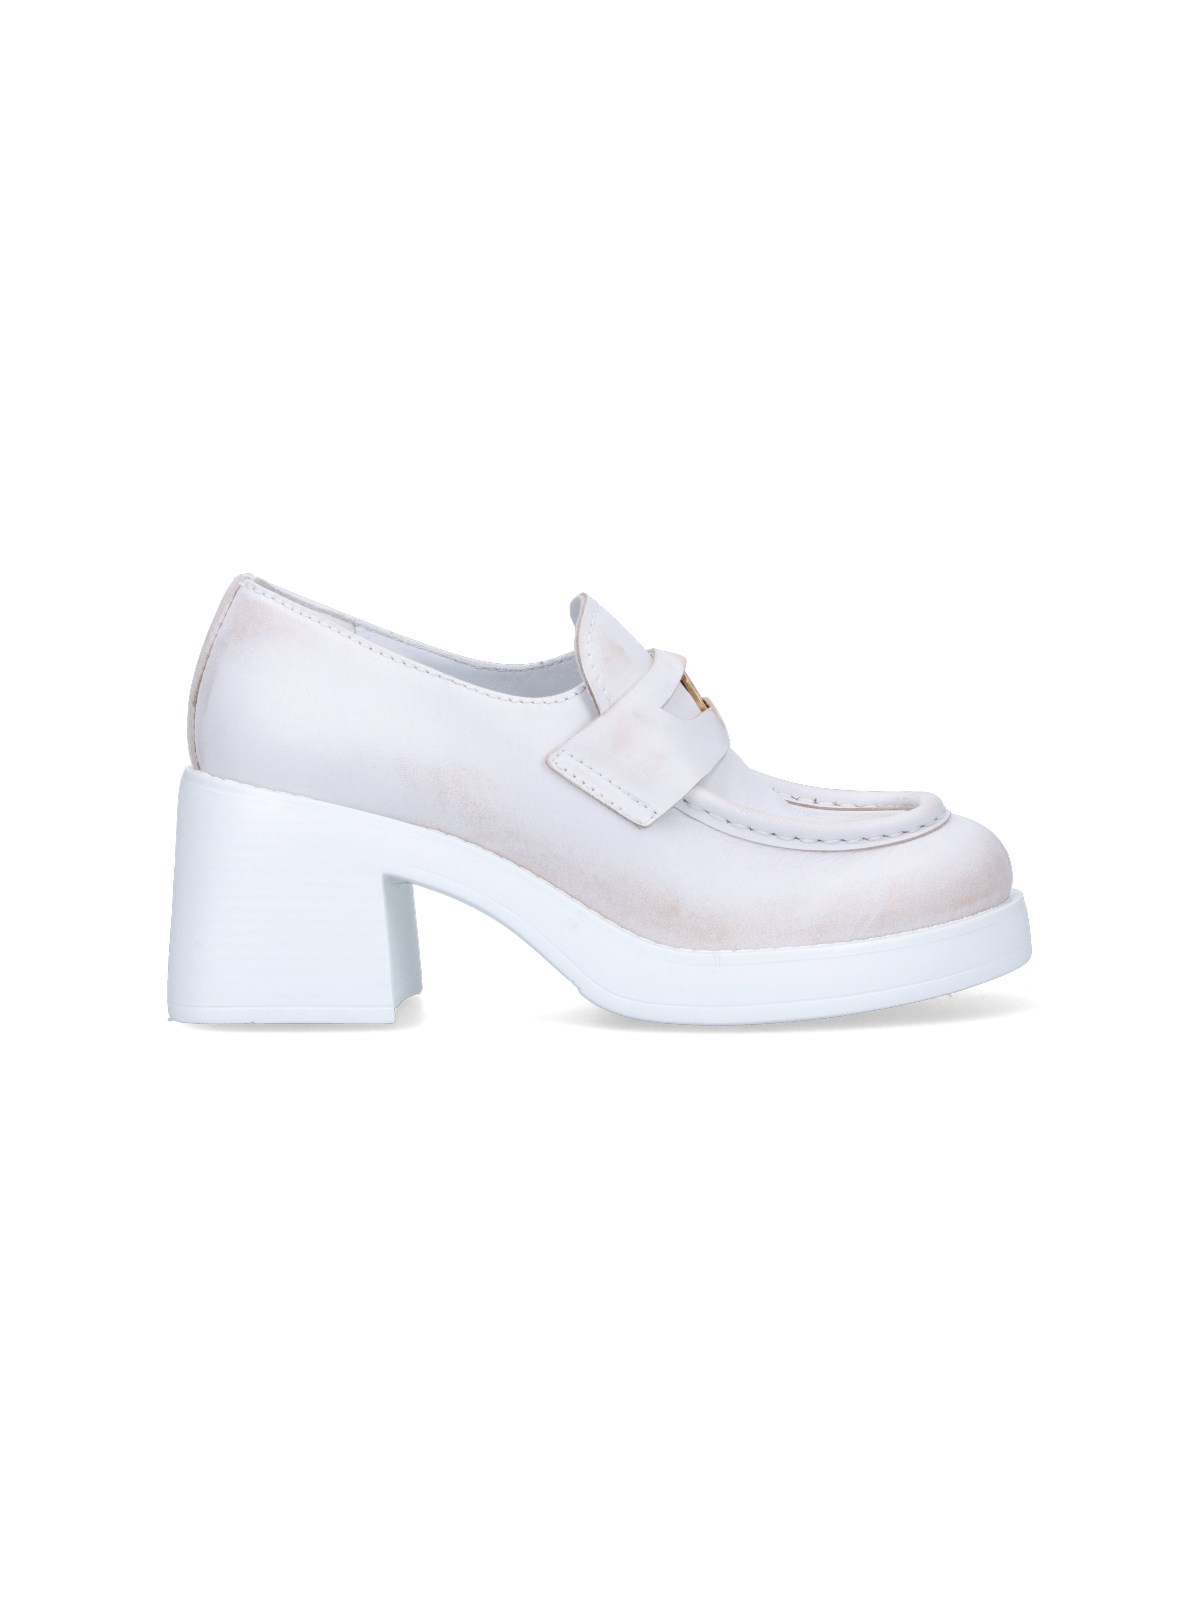 Miu Miu Leather Loafers In White